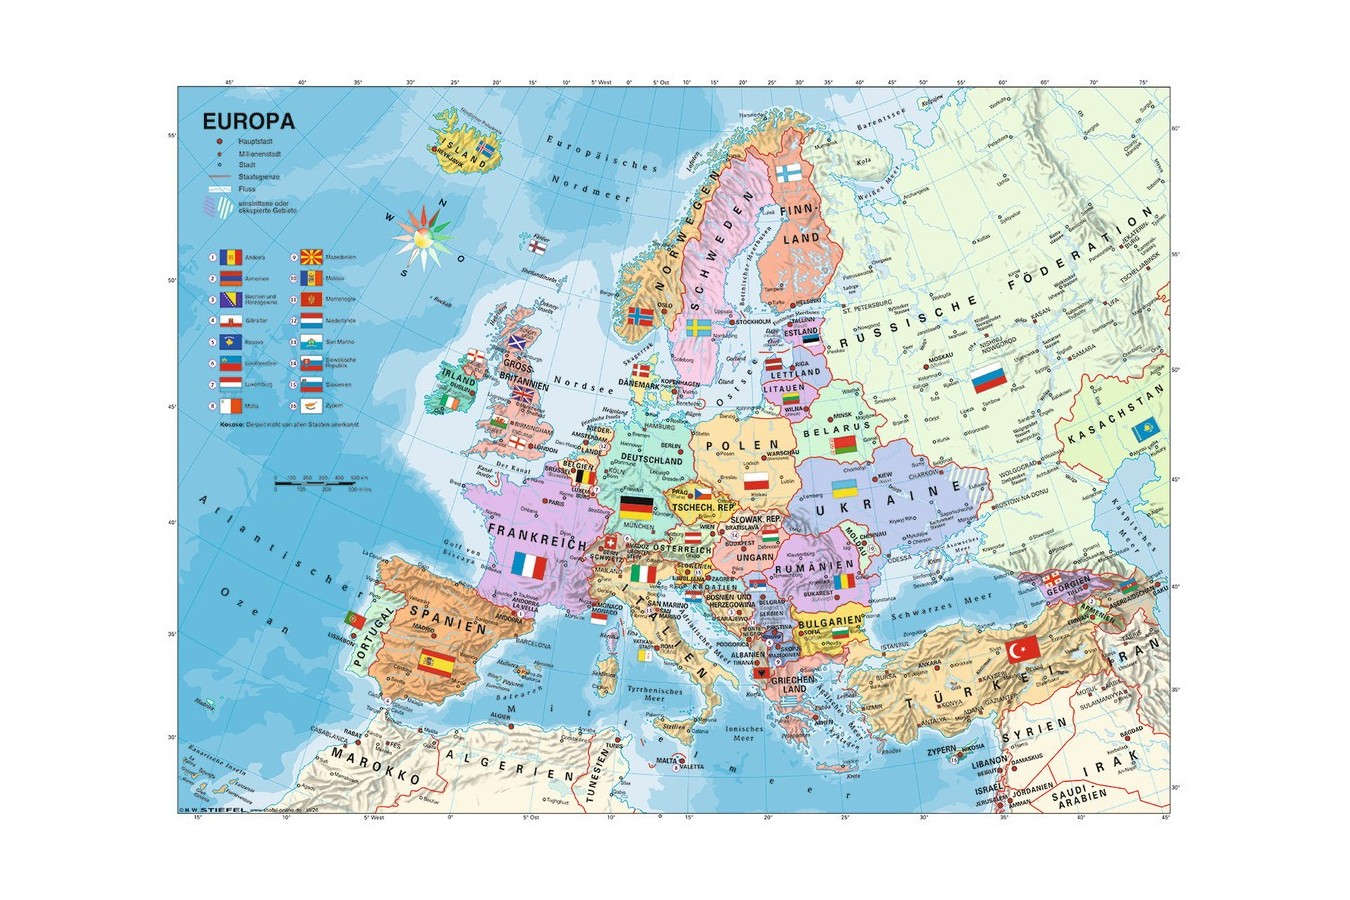 Puzzle Ravensburger - Harta Politica A Europei, 200 Piese